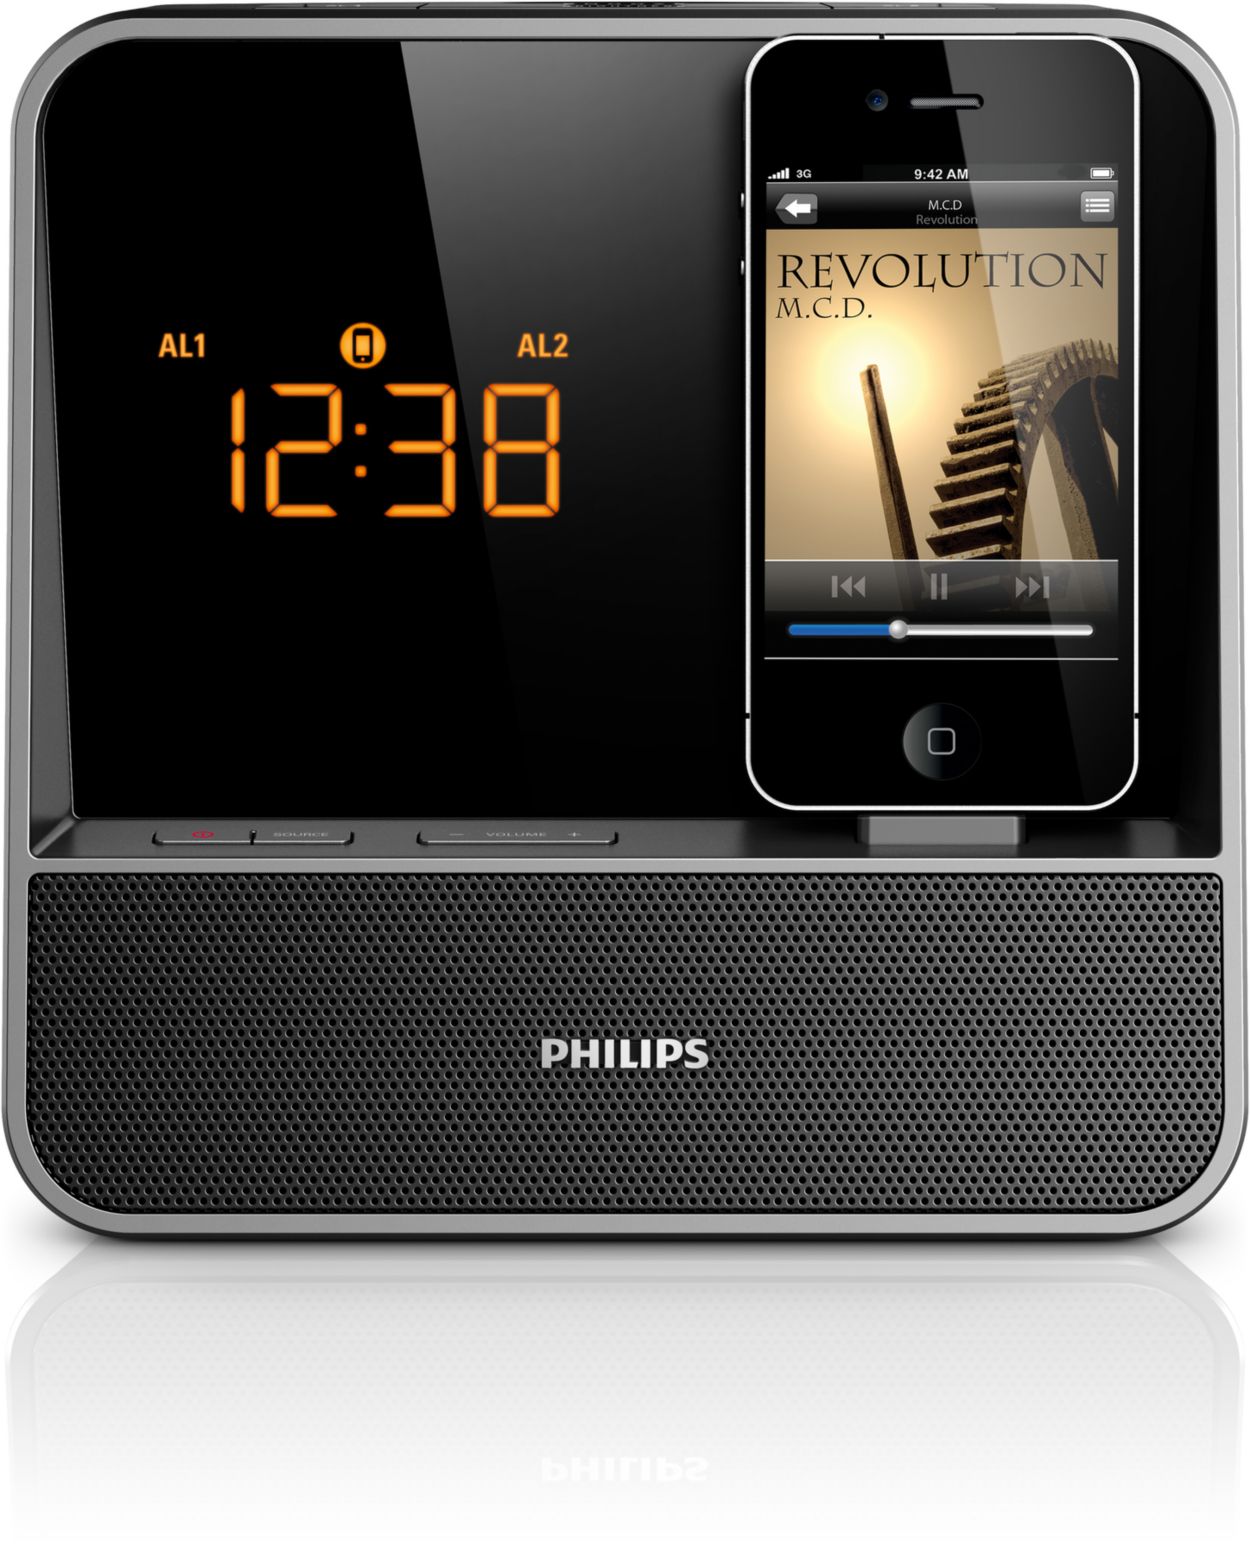 Philips aj3200